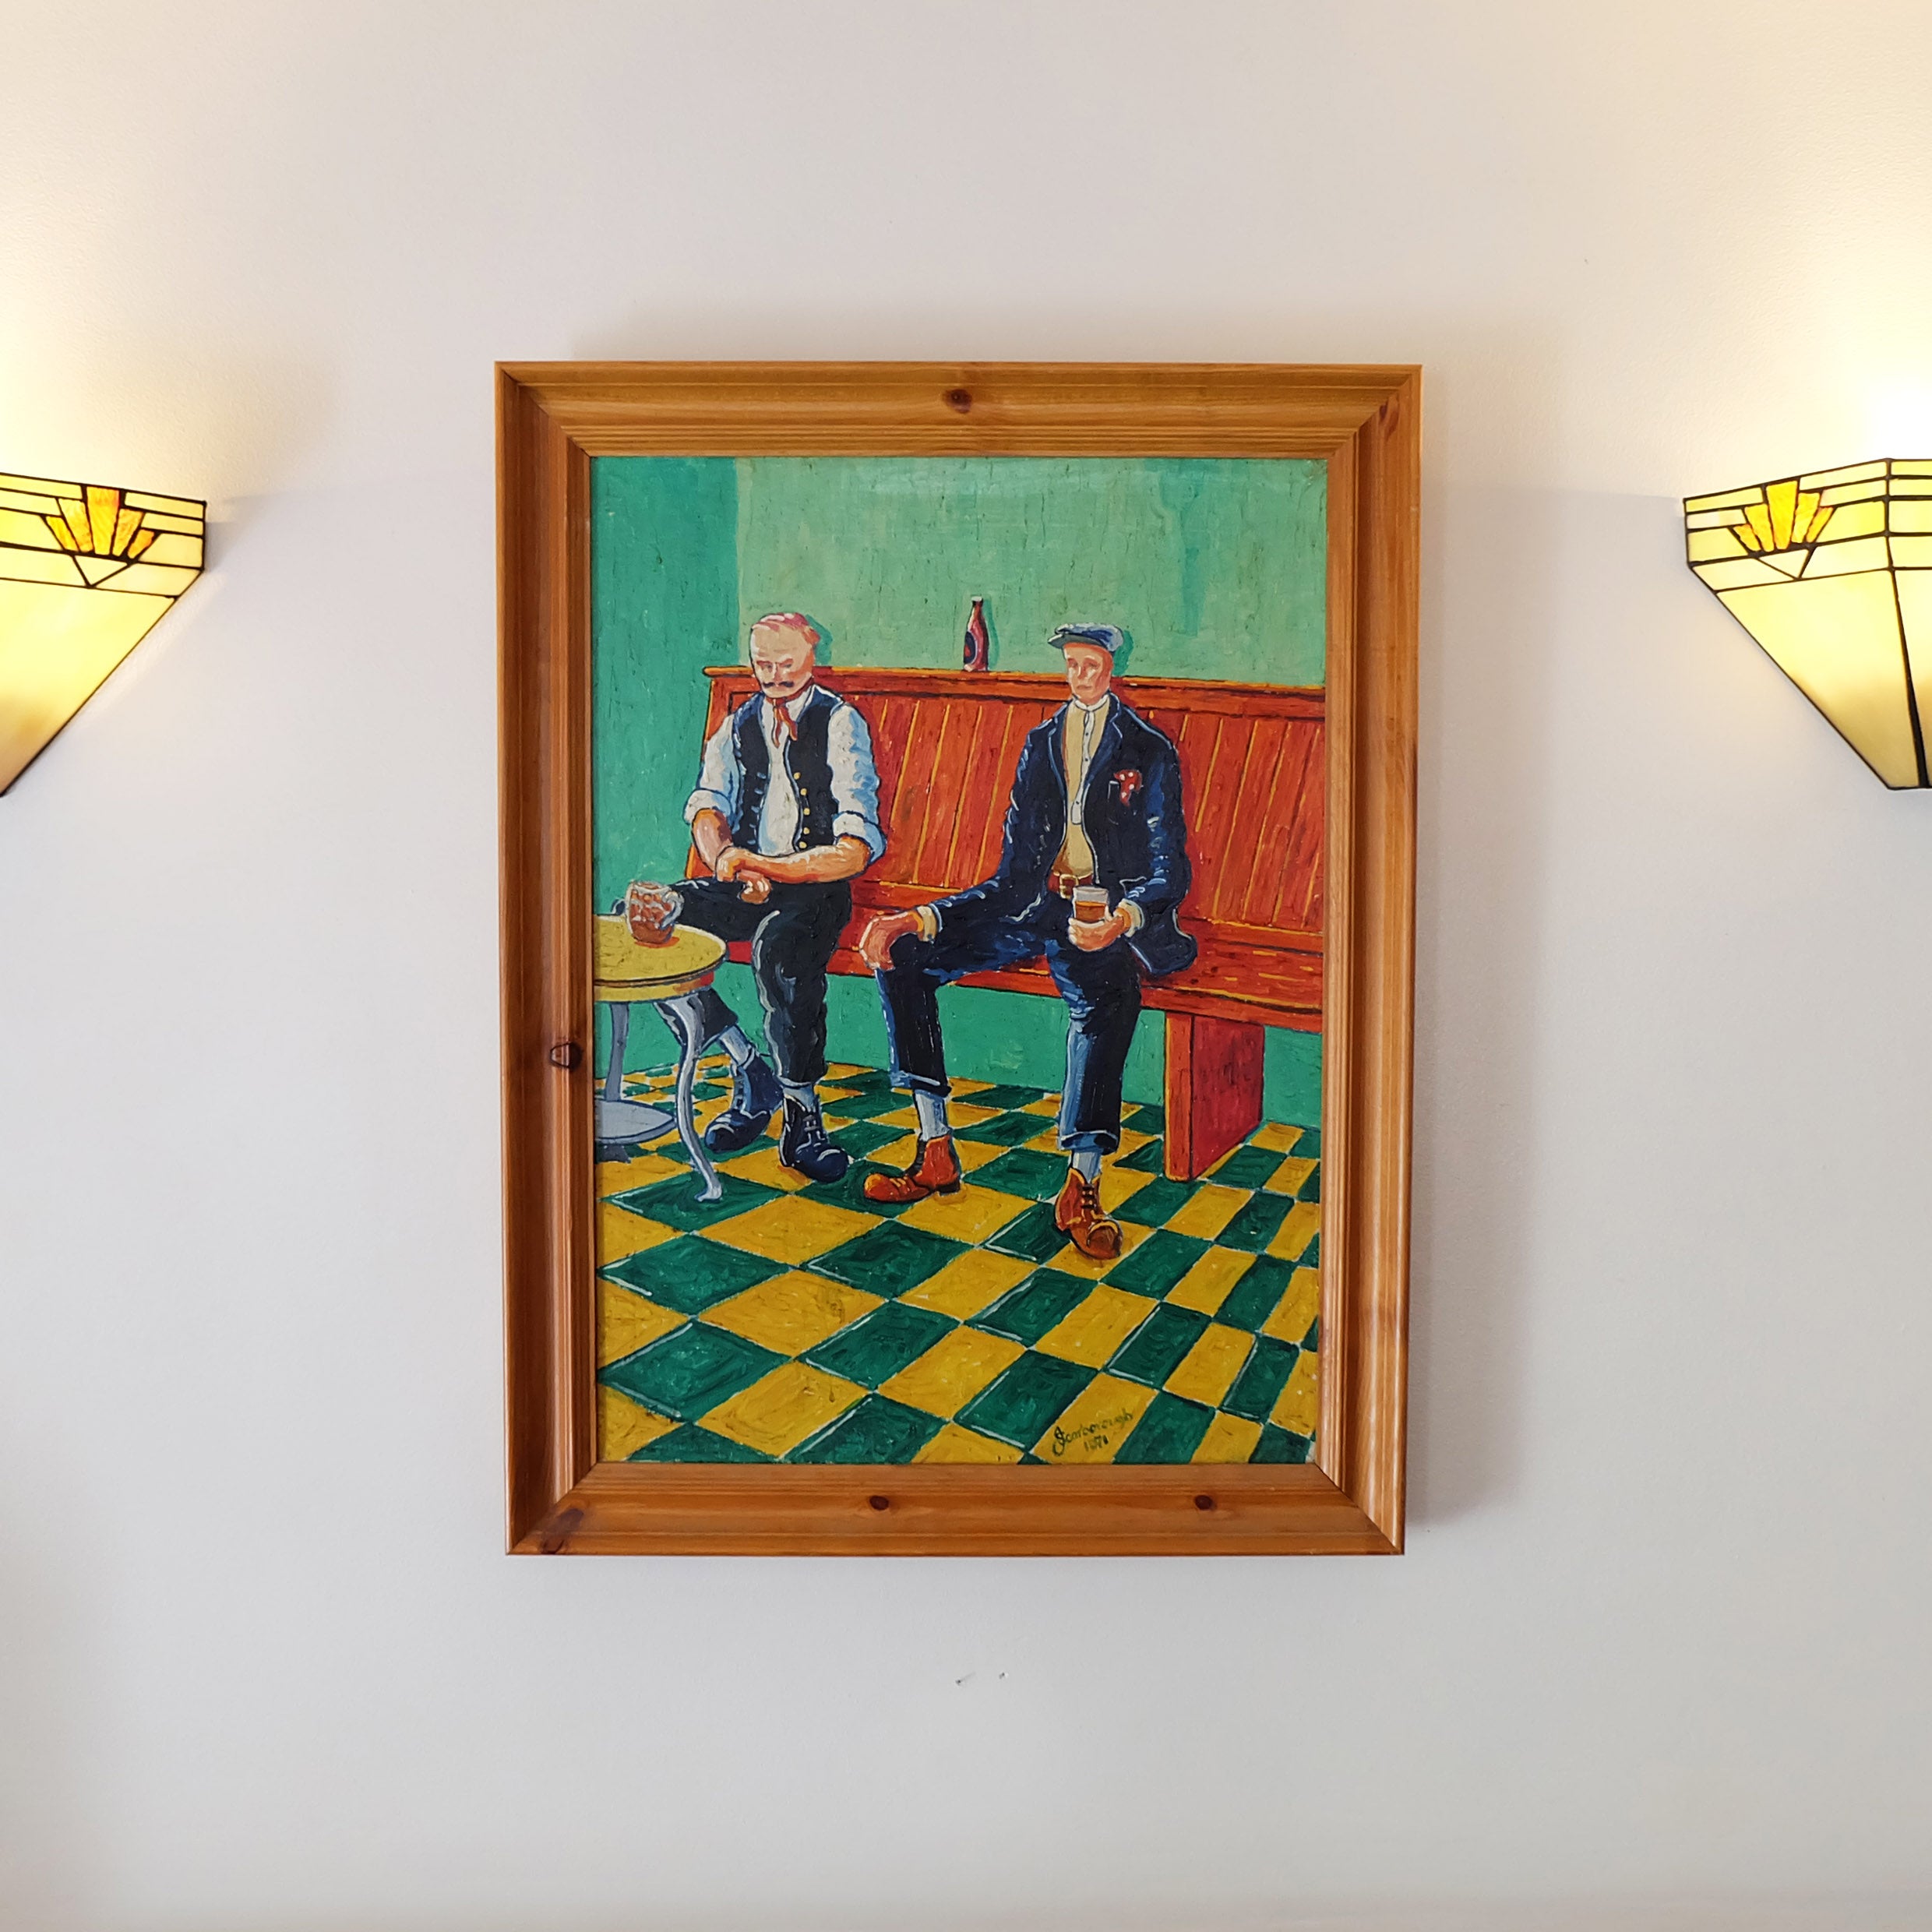 Two Men In A Pub - Original Oil Painting on Canvas by Joe Scarborough - Joe Scarborough Art